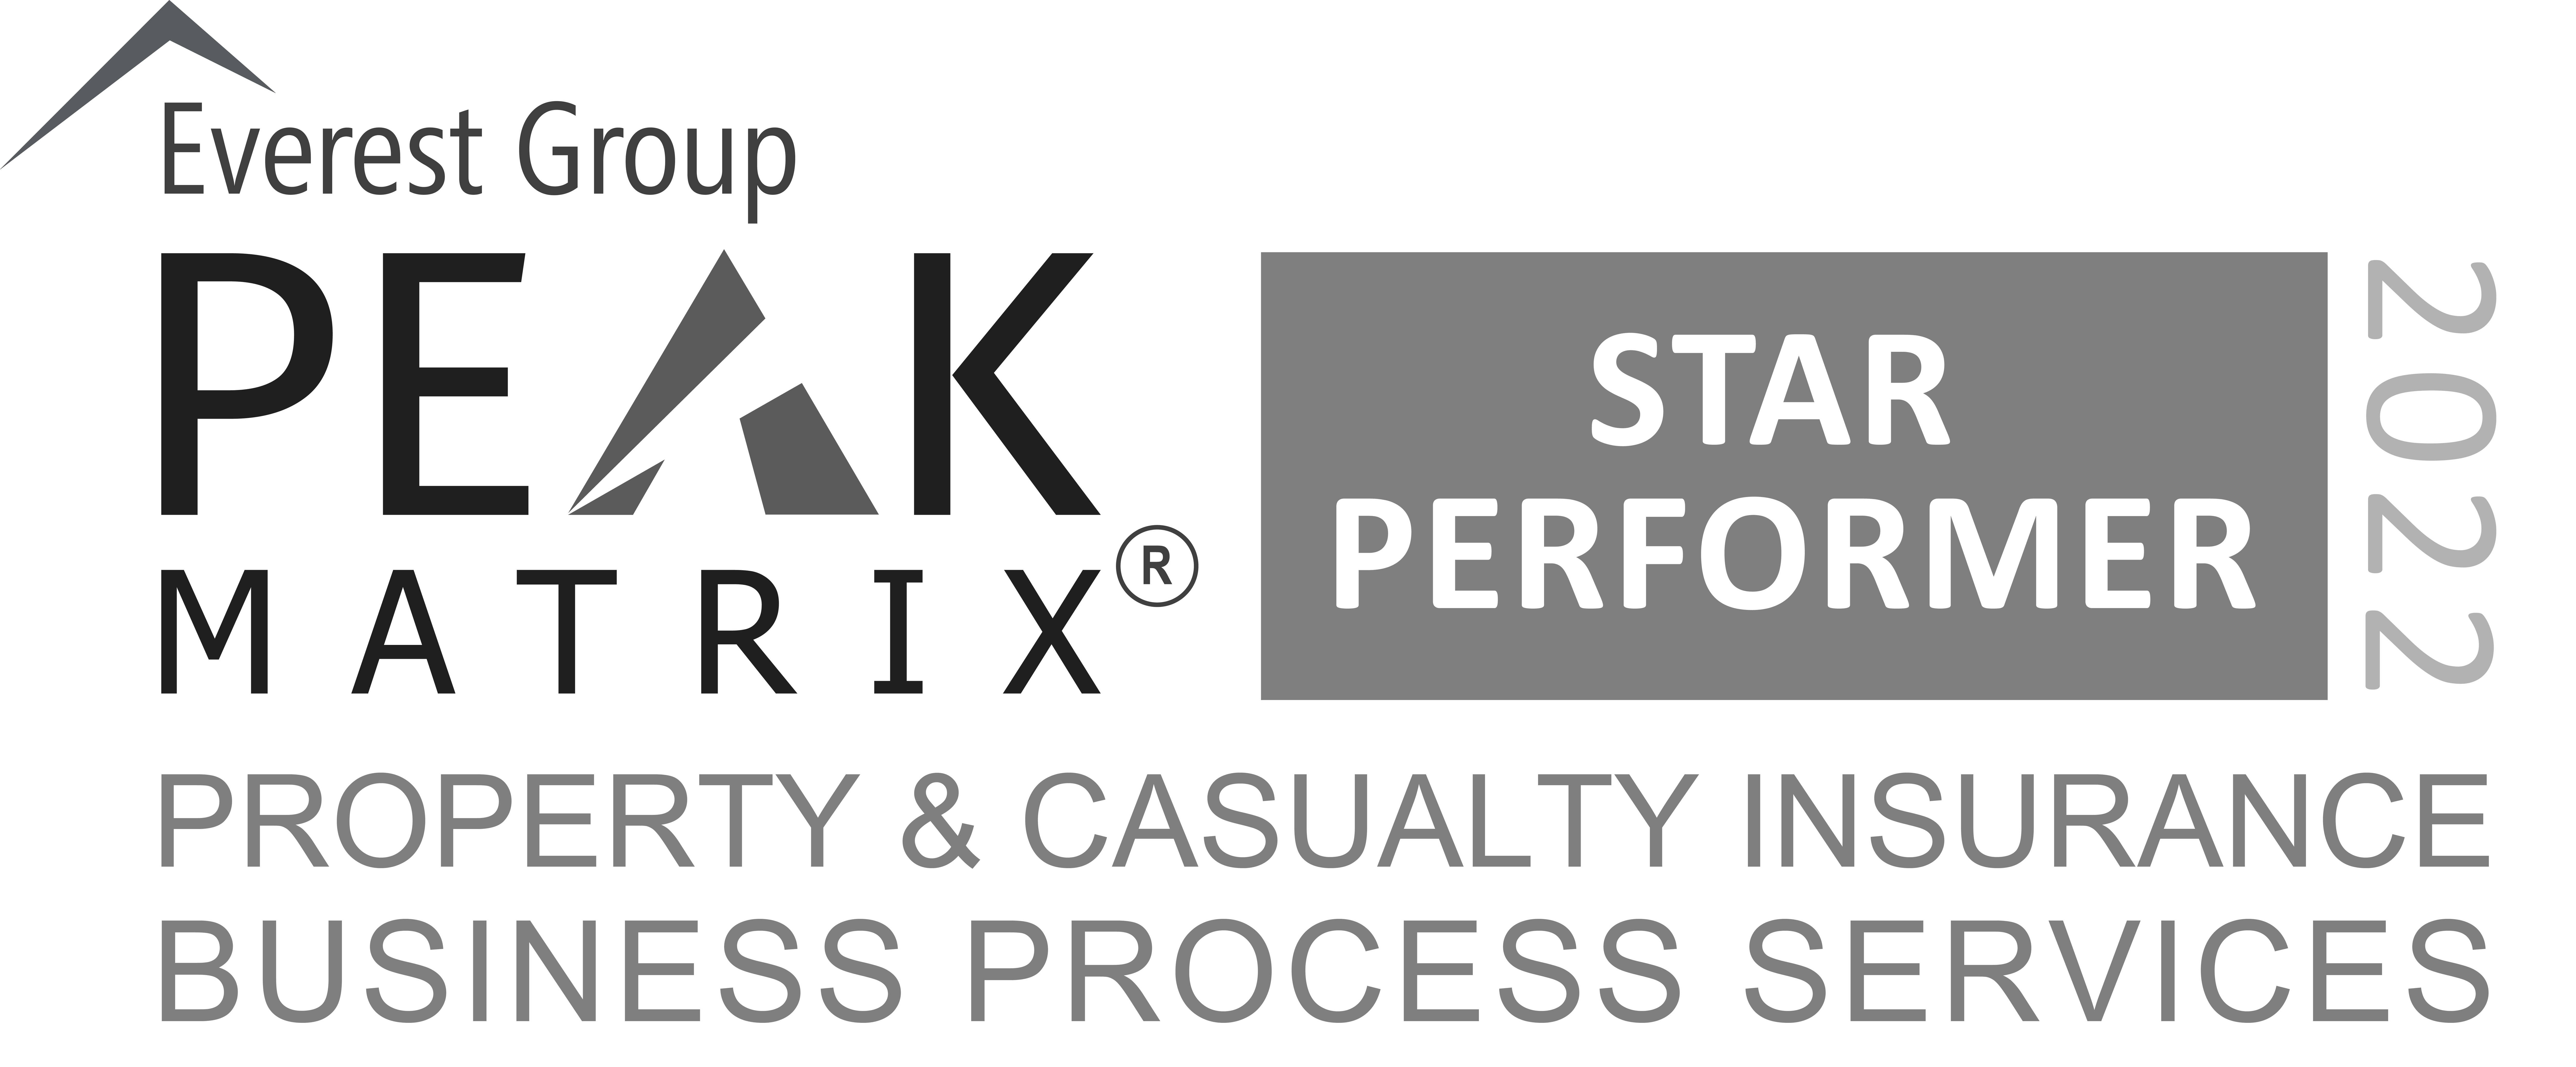 P&C-Insurance-BPS-2022-PEAK-Matrix-Award-Logo-Star-Performer